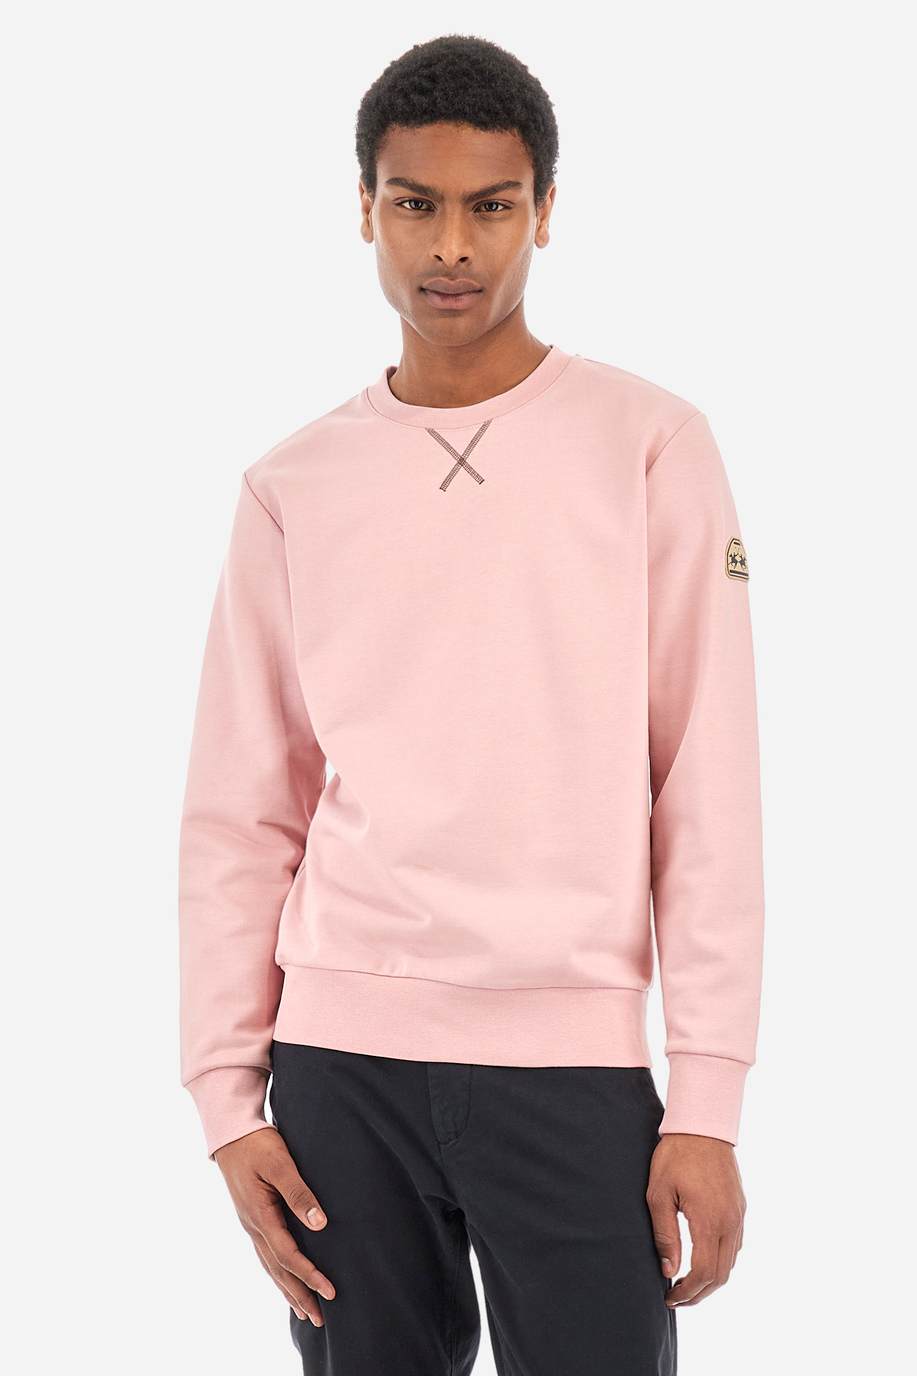 Herren-Sweatshirt Regular Fit - Yaarb - Frühlingskleidung für ihn | La Martina - Official Online Shop